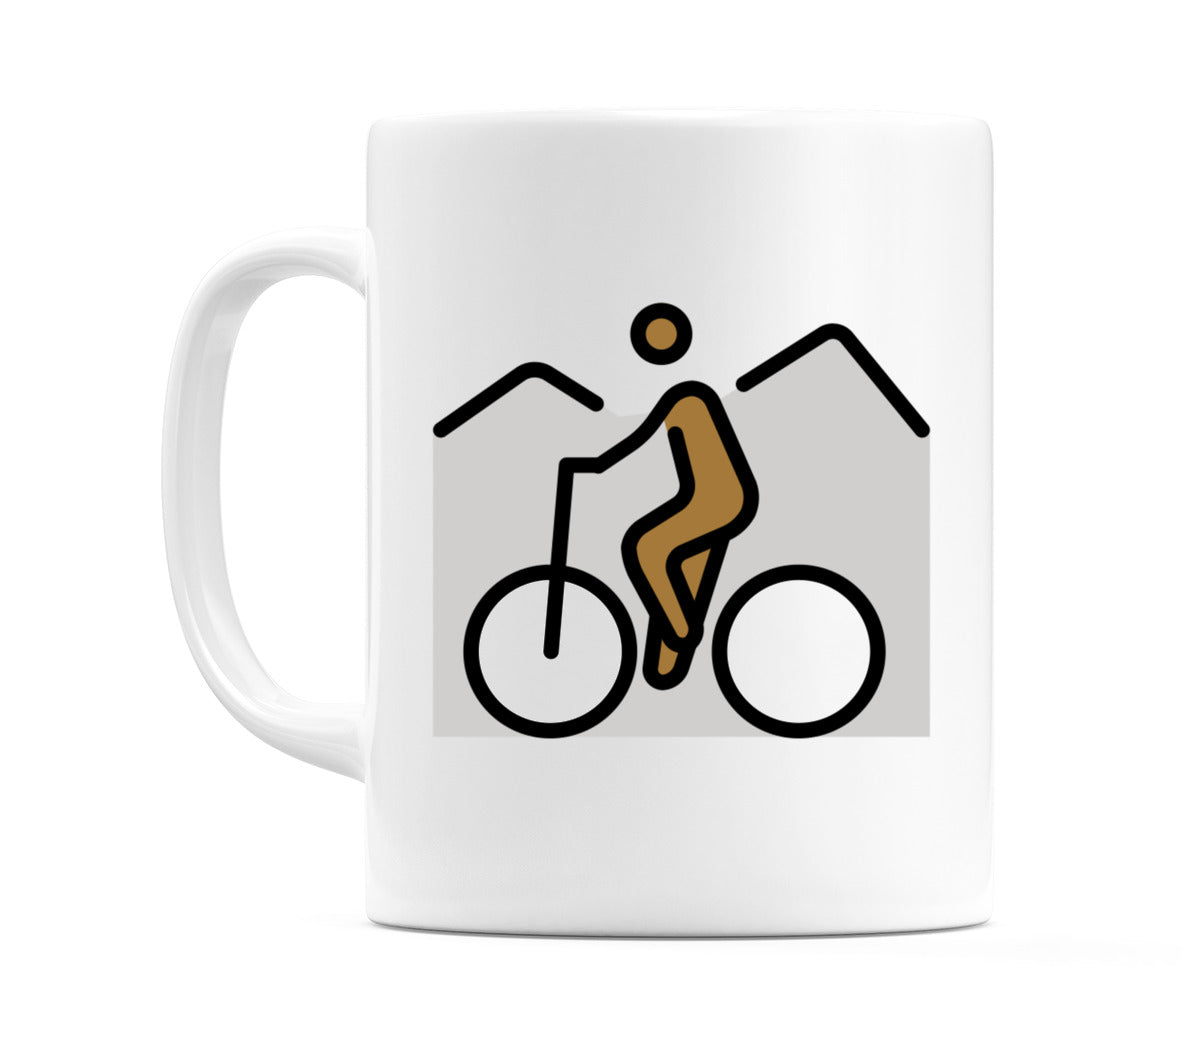 Person Mountain Biking: Medium-Dark Skin Tone Emoji Mug